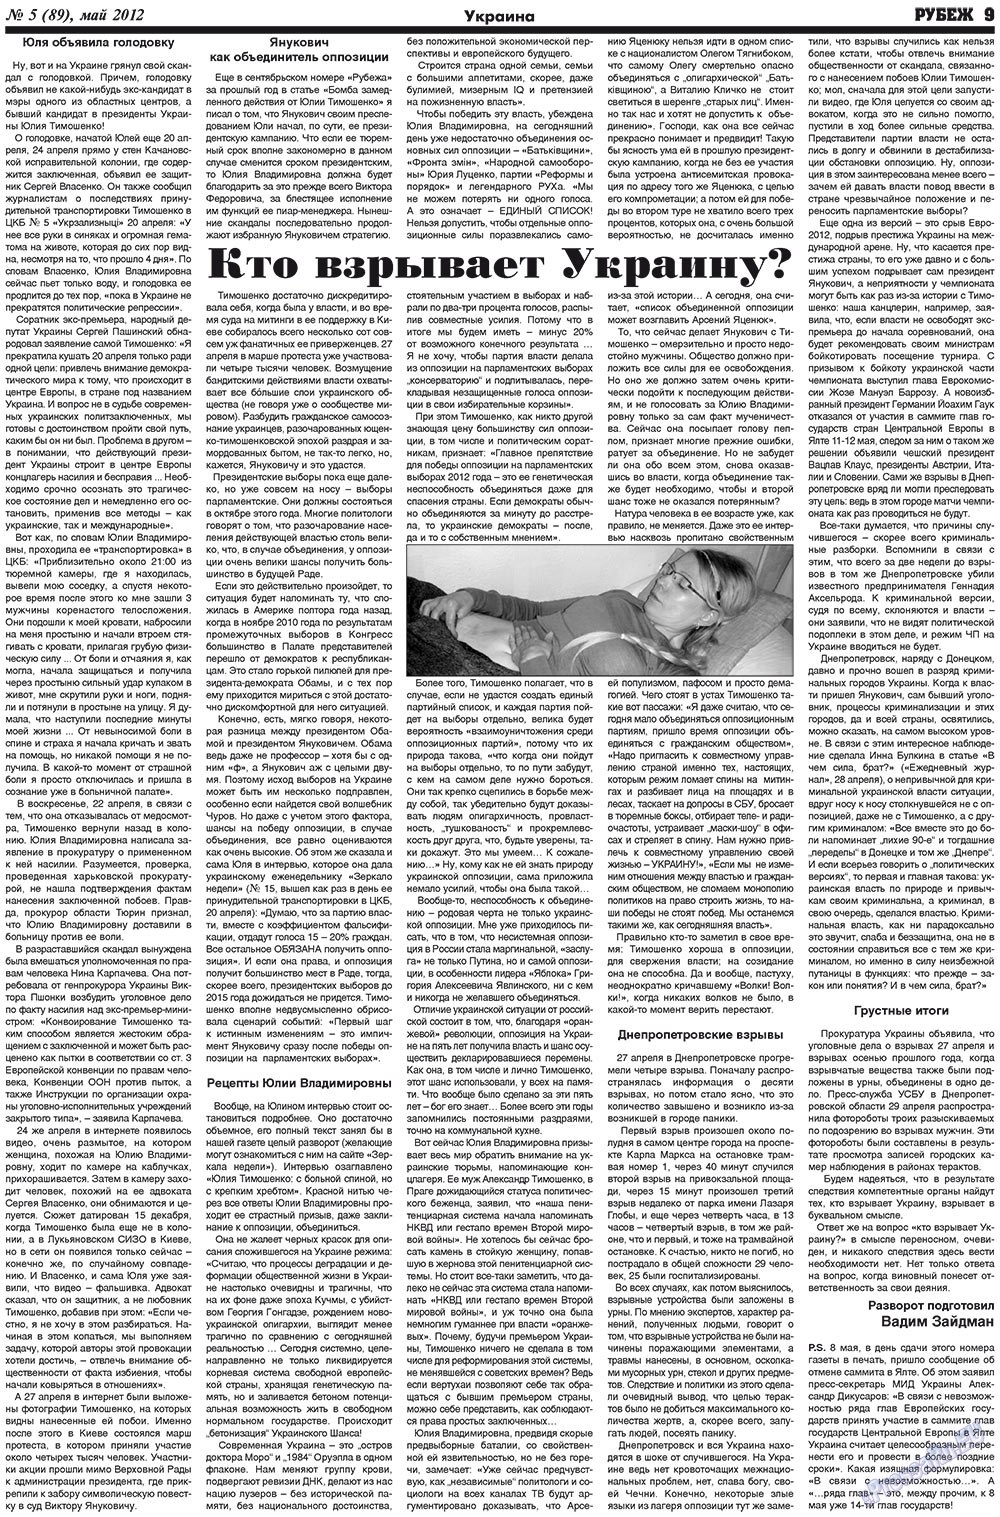 Рубеж, газета. 2012 №5 стр.9